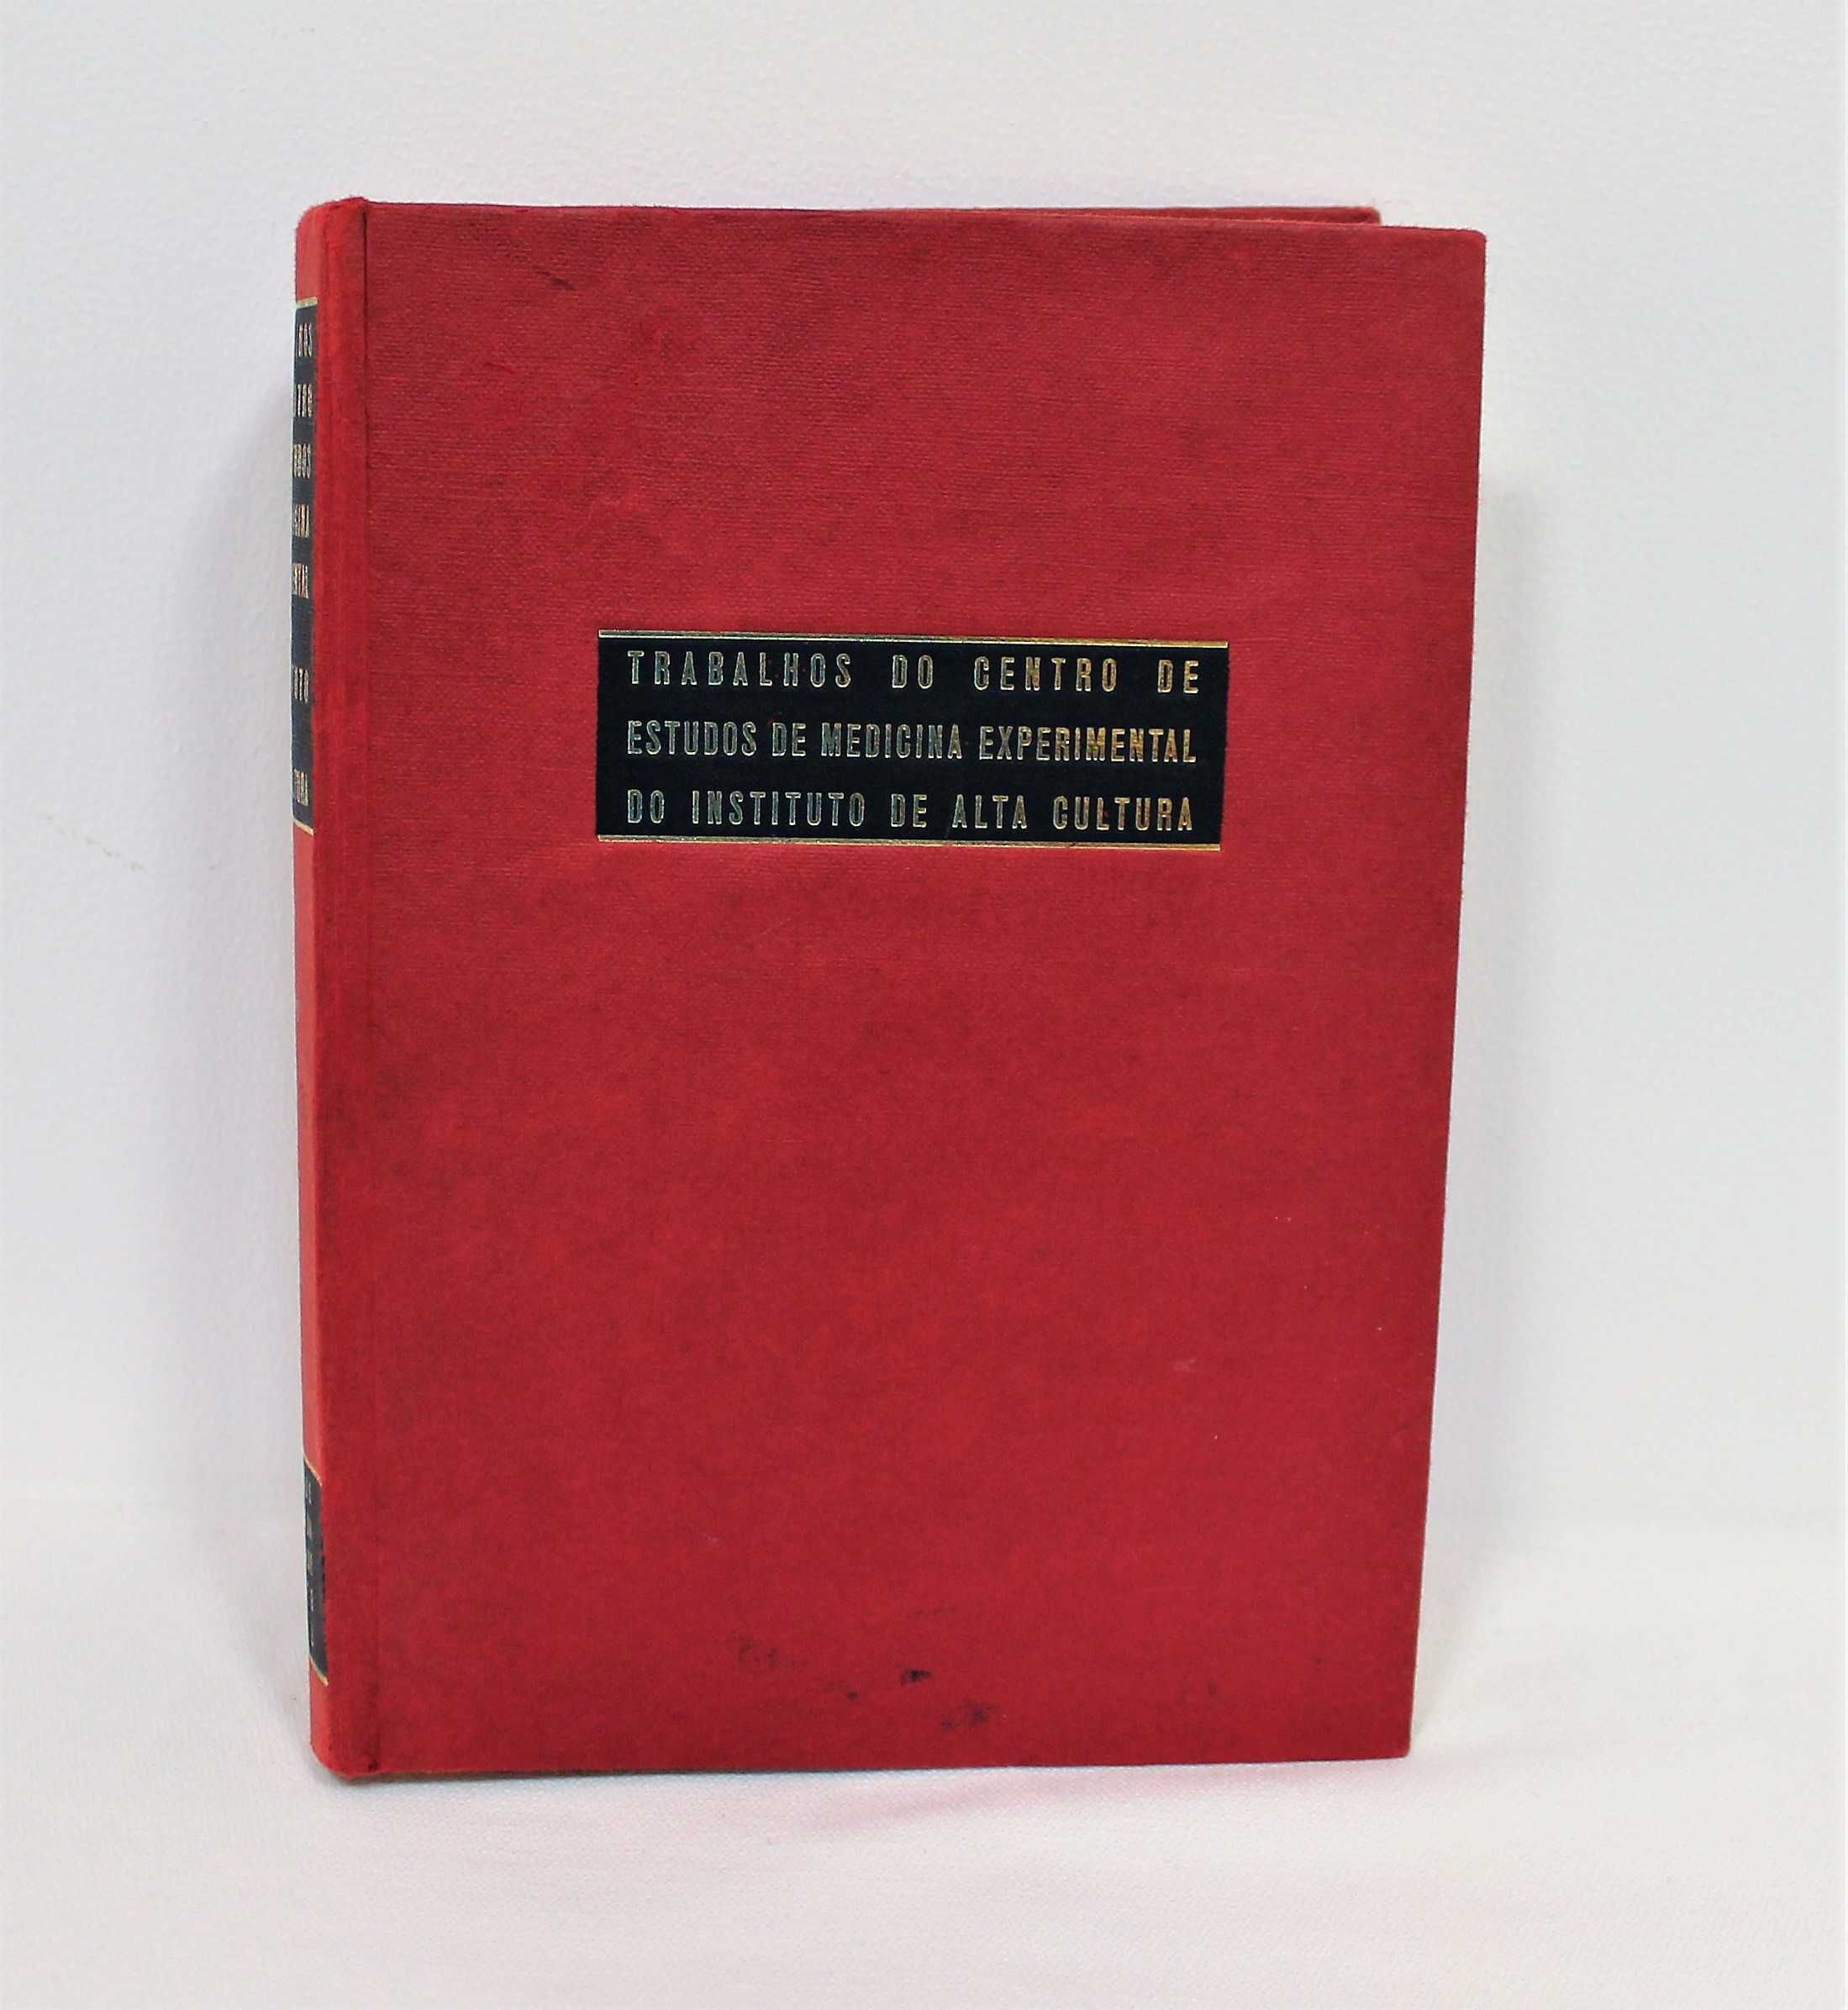 Livro Trabalhos Medicina Experimental, Instituto Alta Cultura, 1965